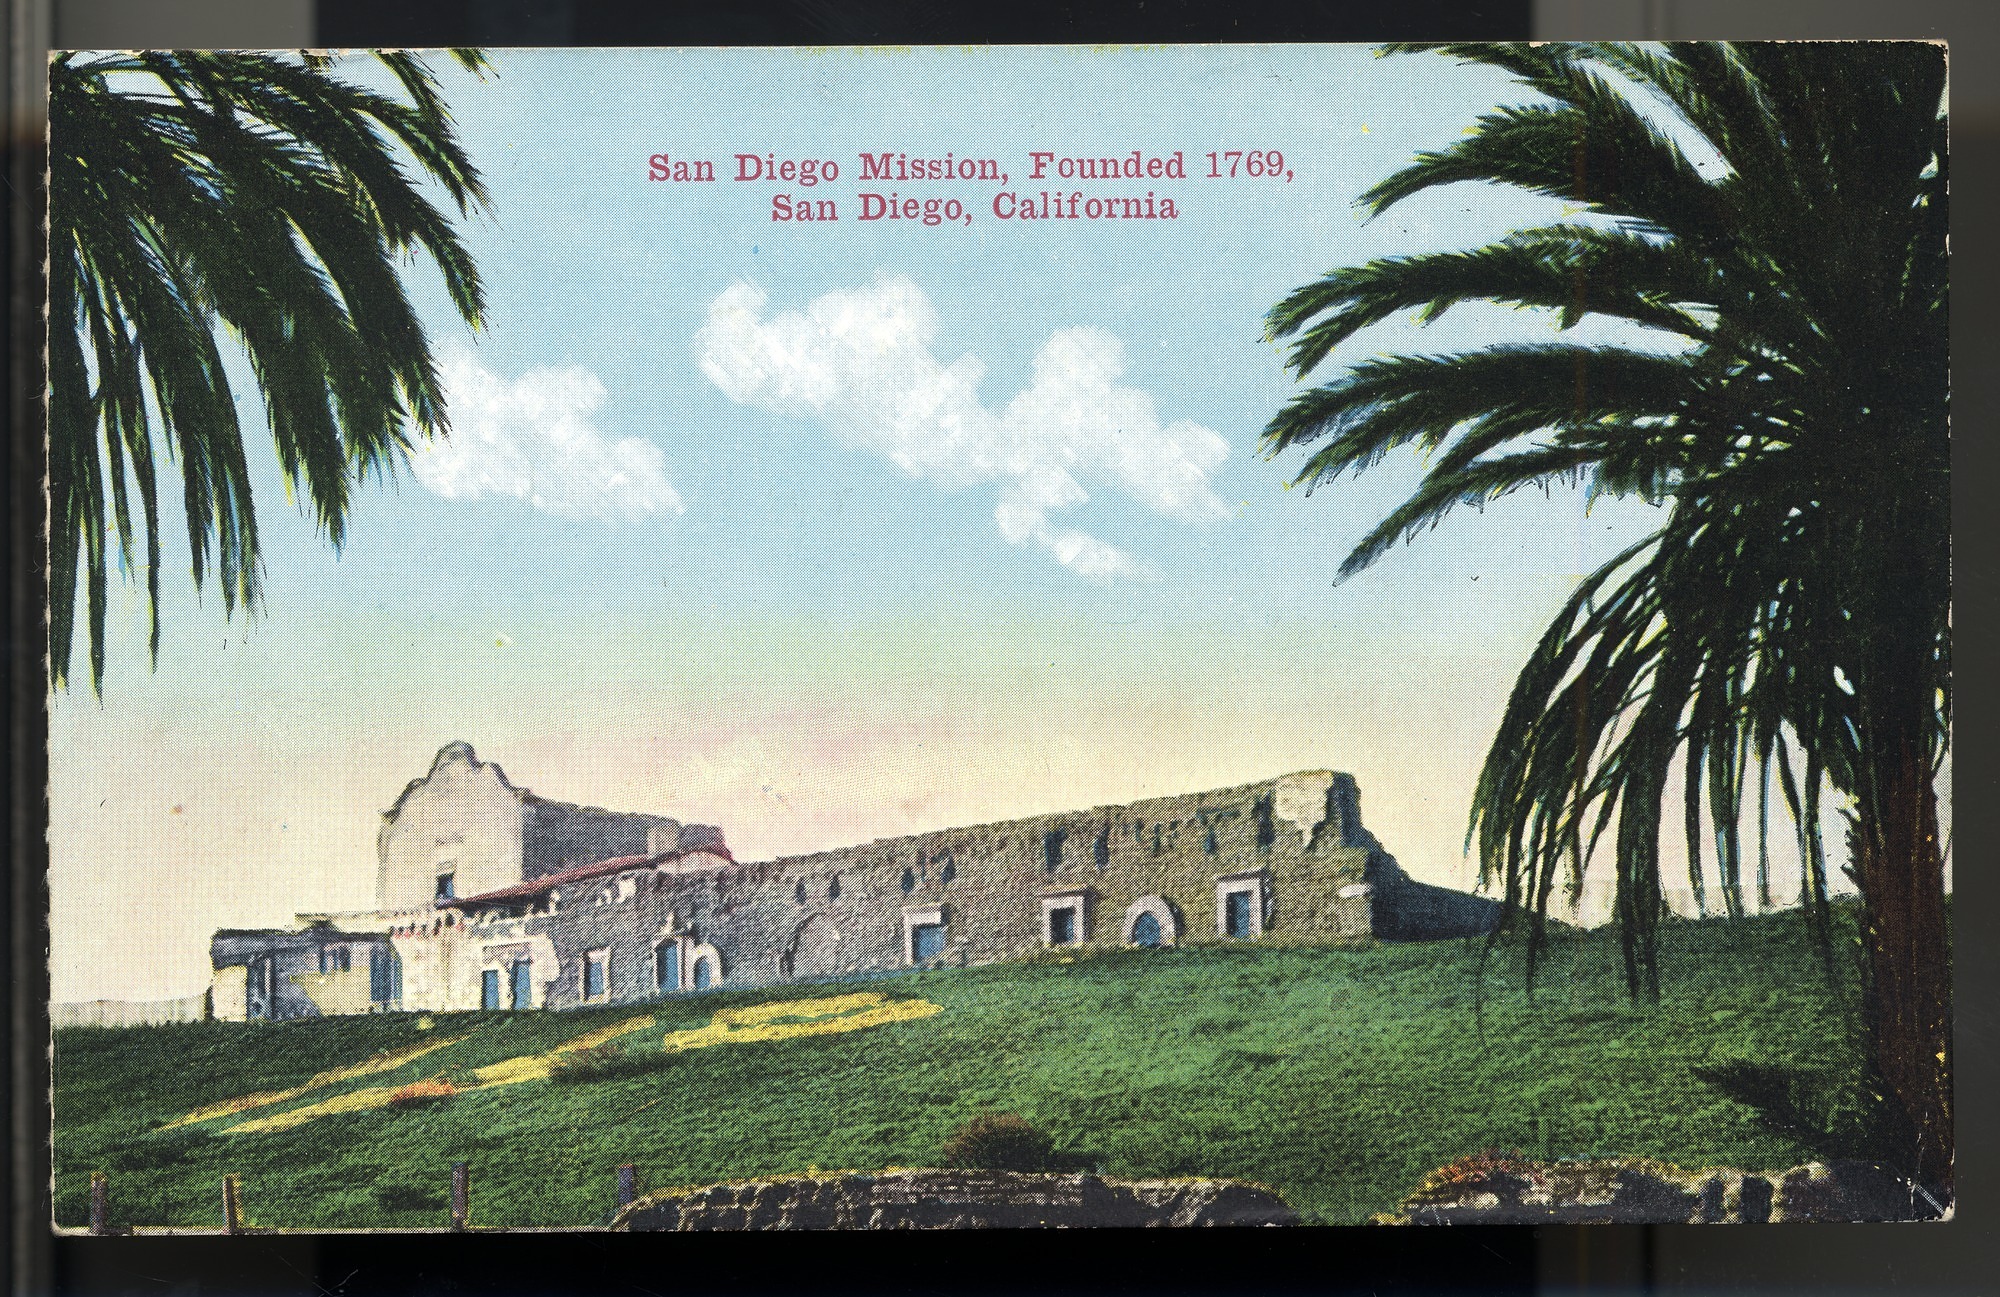 Postcard 01 – San Diego Mission, Founded 1769, San Diego, California. Van Ornum Colorprint Company. 1908-1921. NMAH 1986.0639.0476.